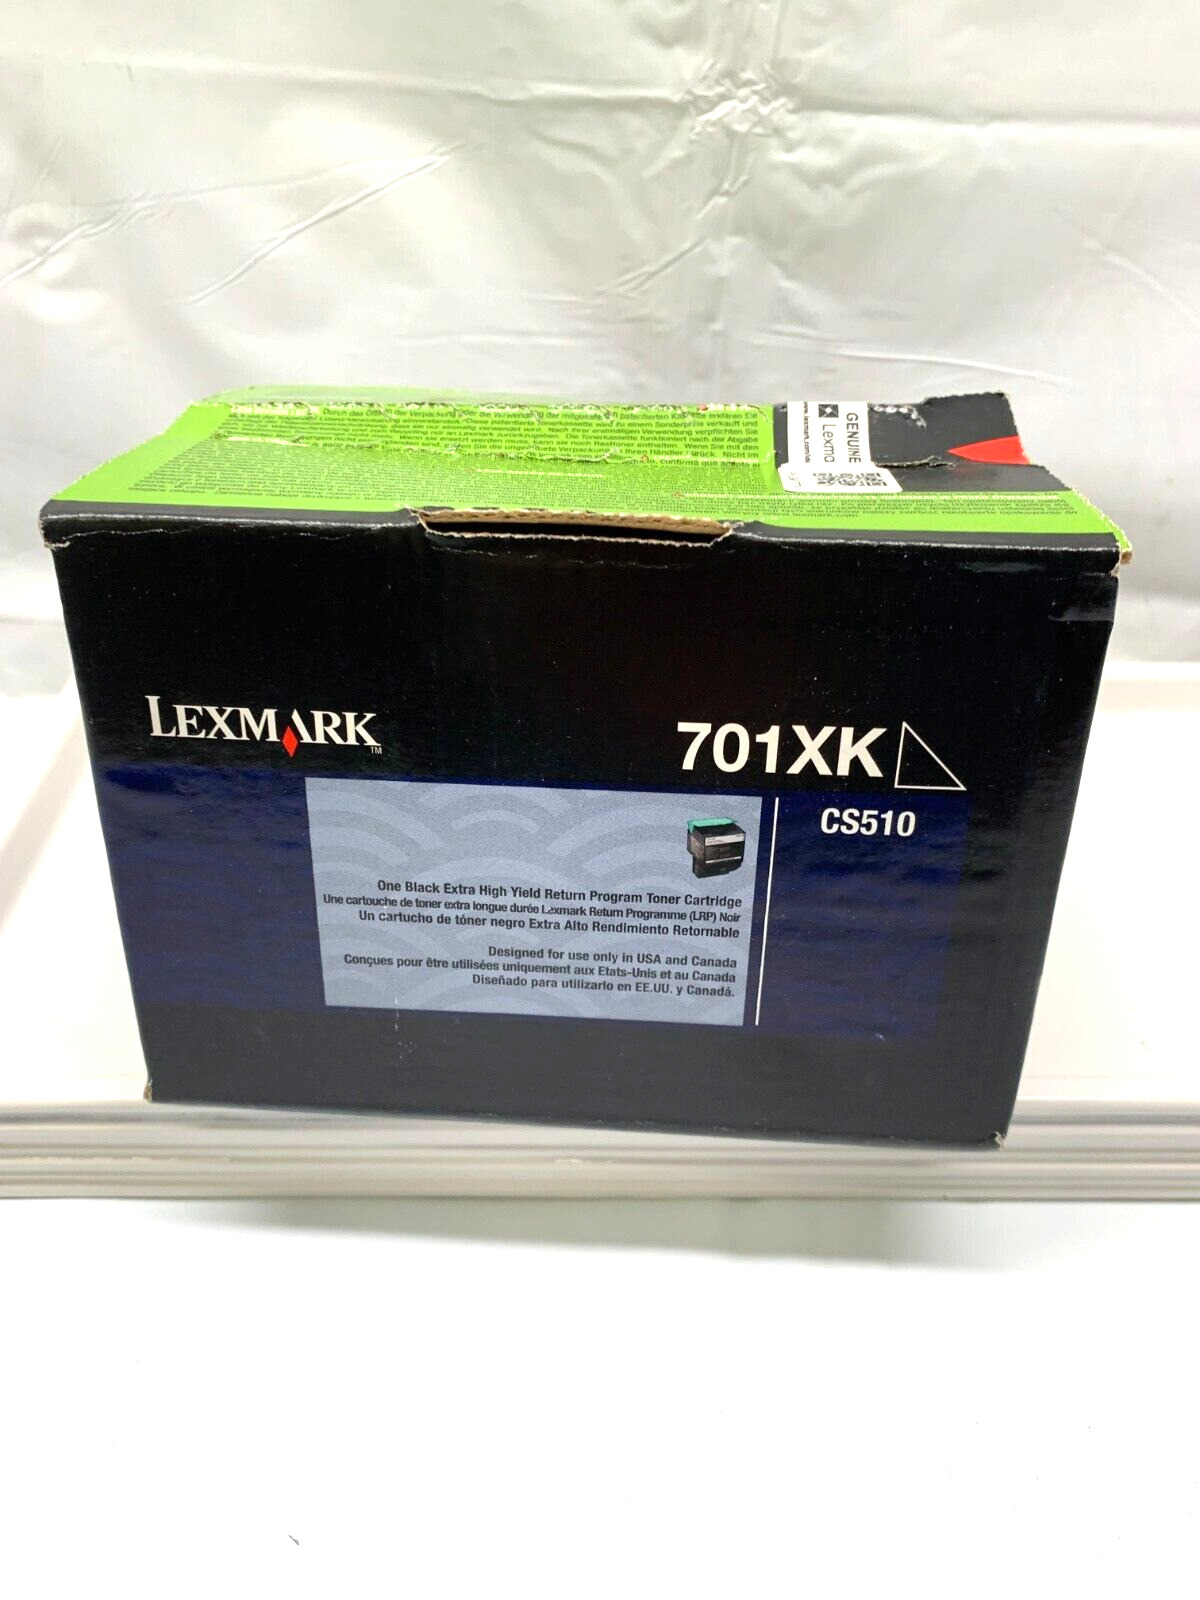 Lexmark 701XK Black Extra High Yield Program Toner Cartridge *New-Box Damage